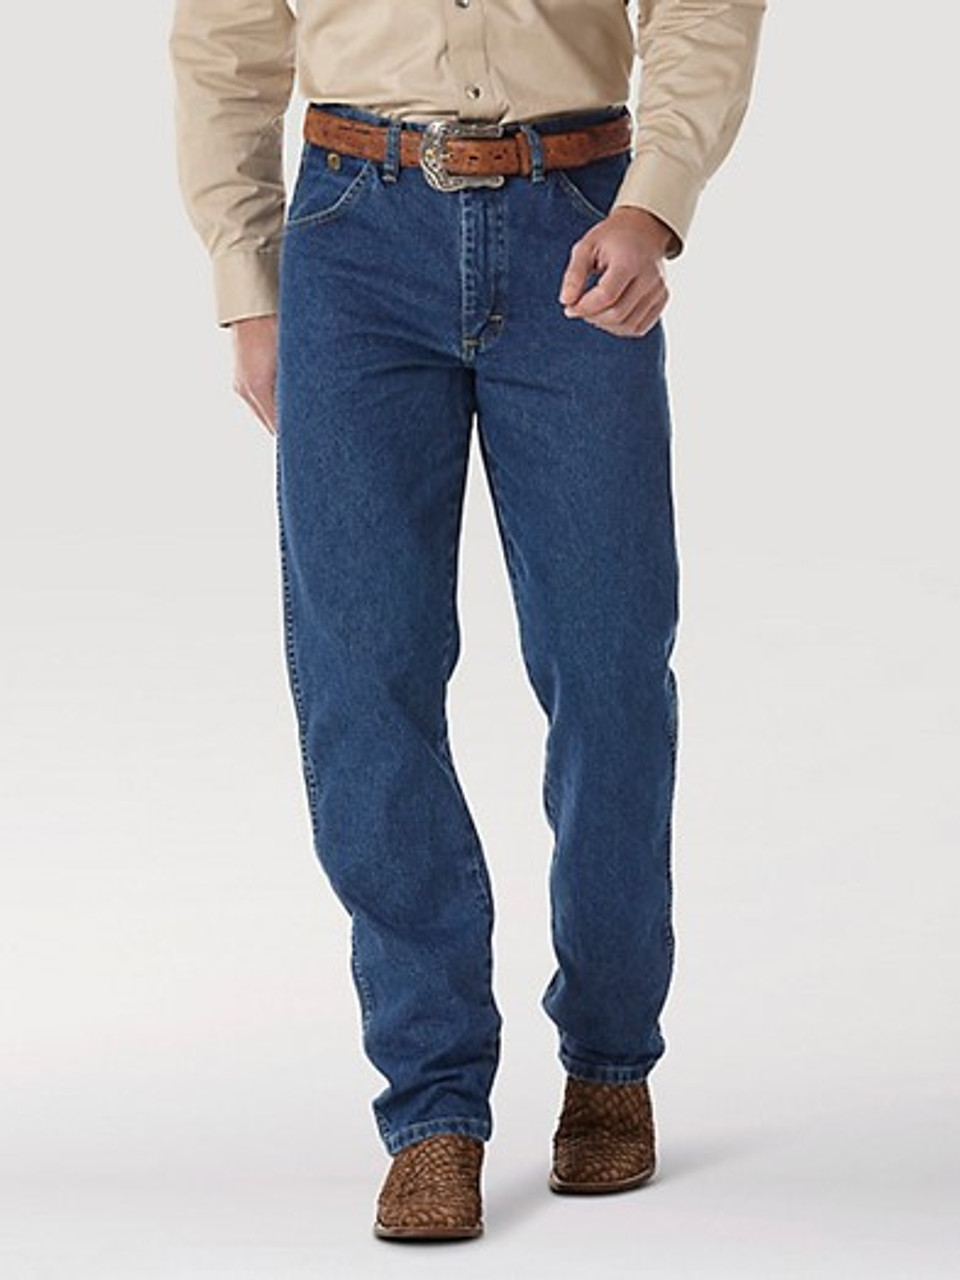 31MGSHD Wrangler Men's George Strait Cowboy Cut ® Relaxed Fit Jean